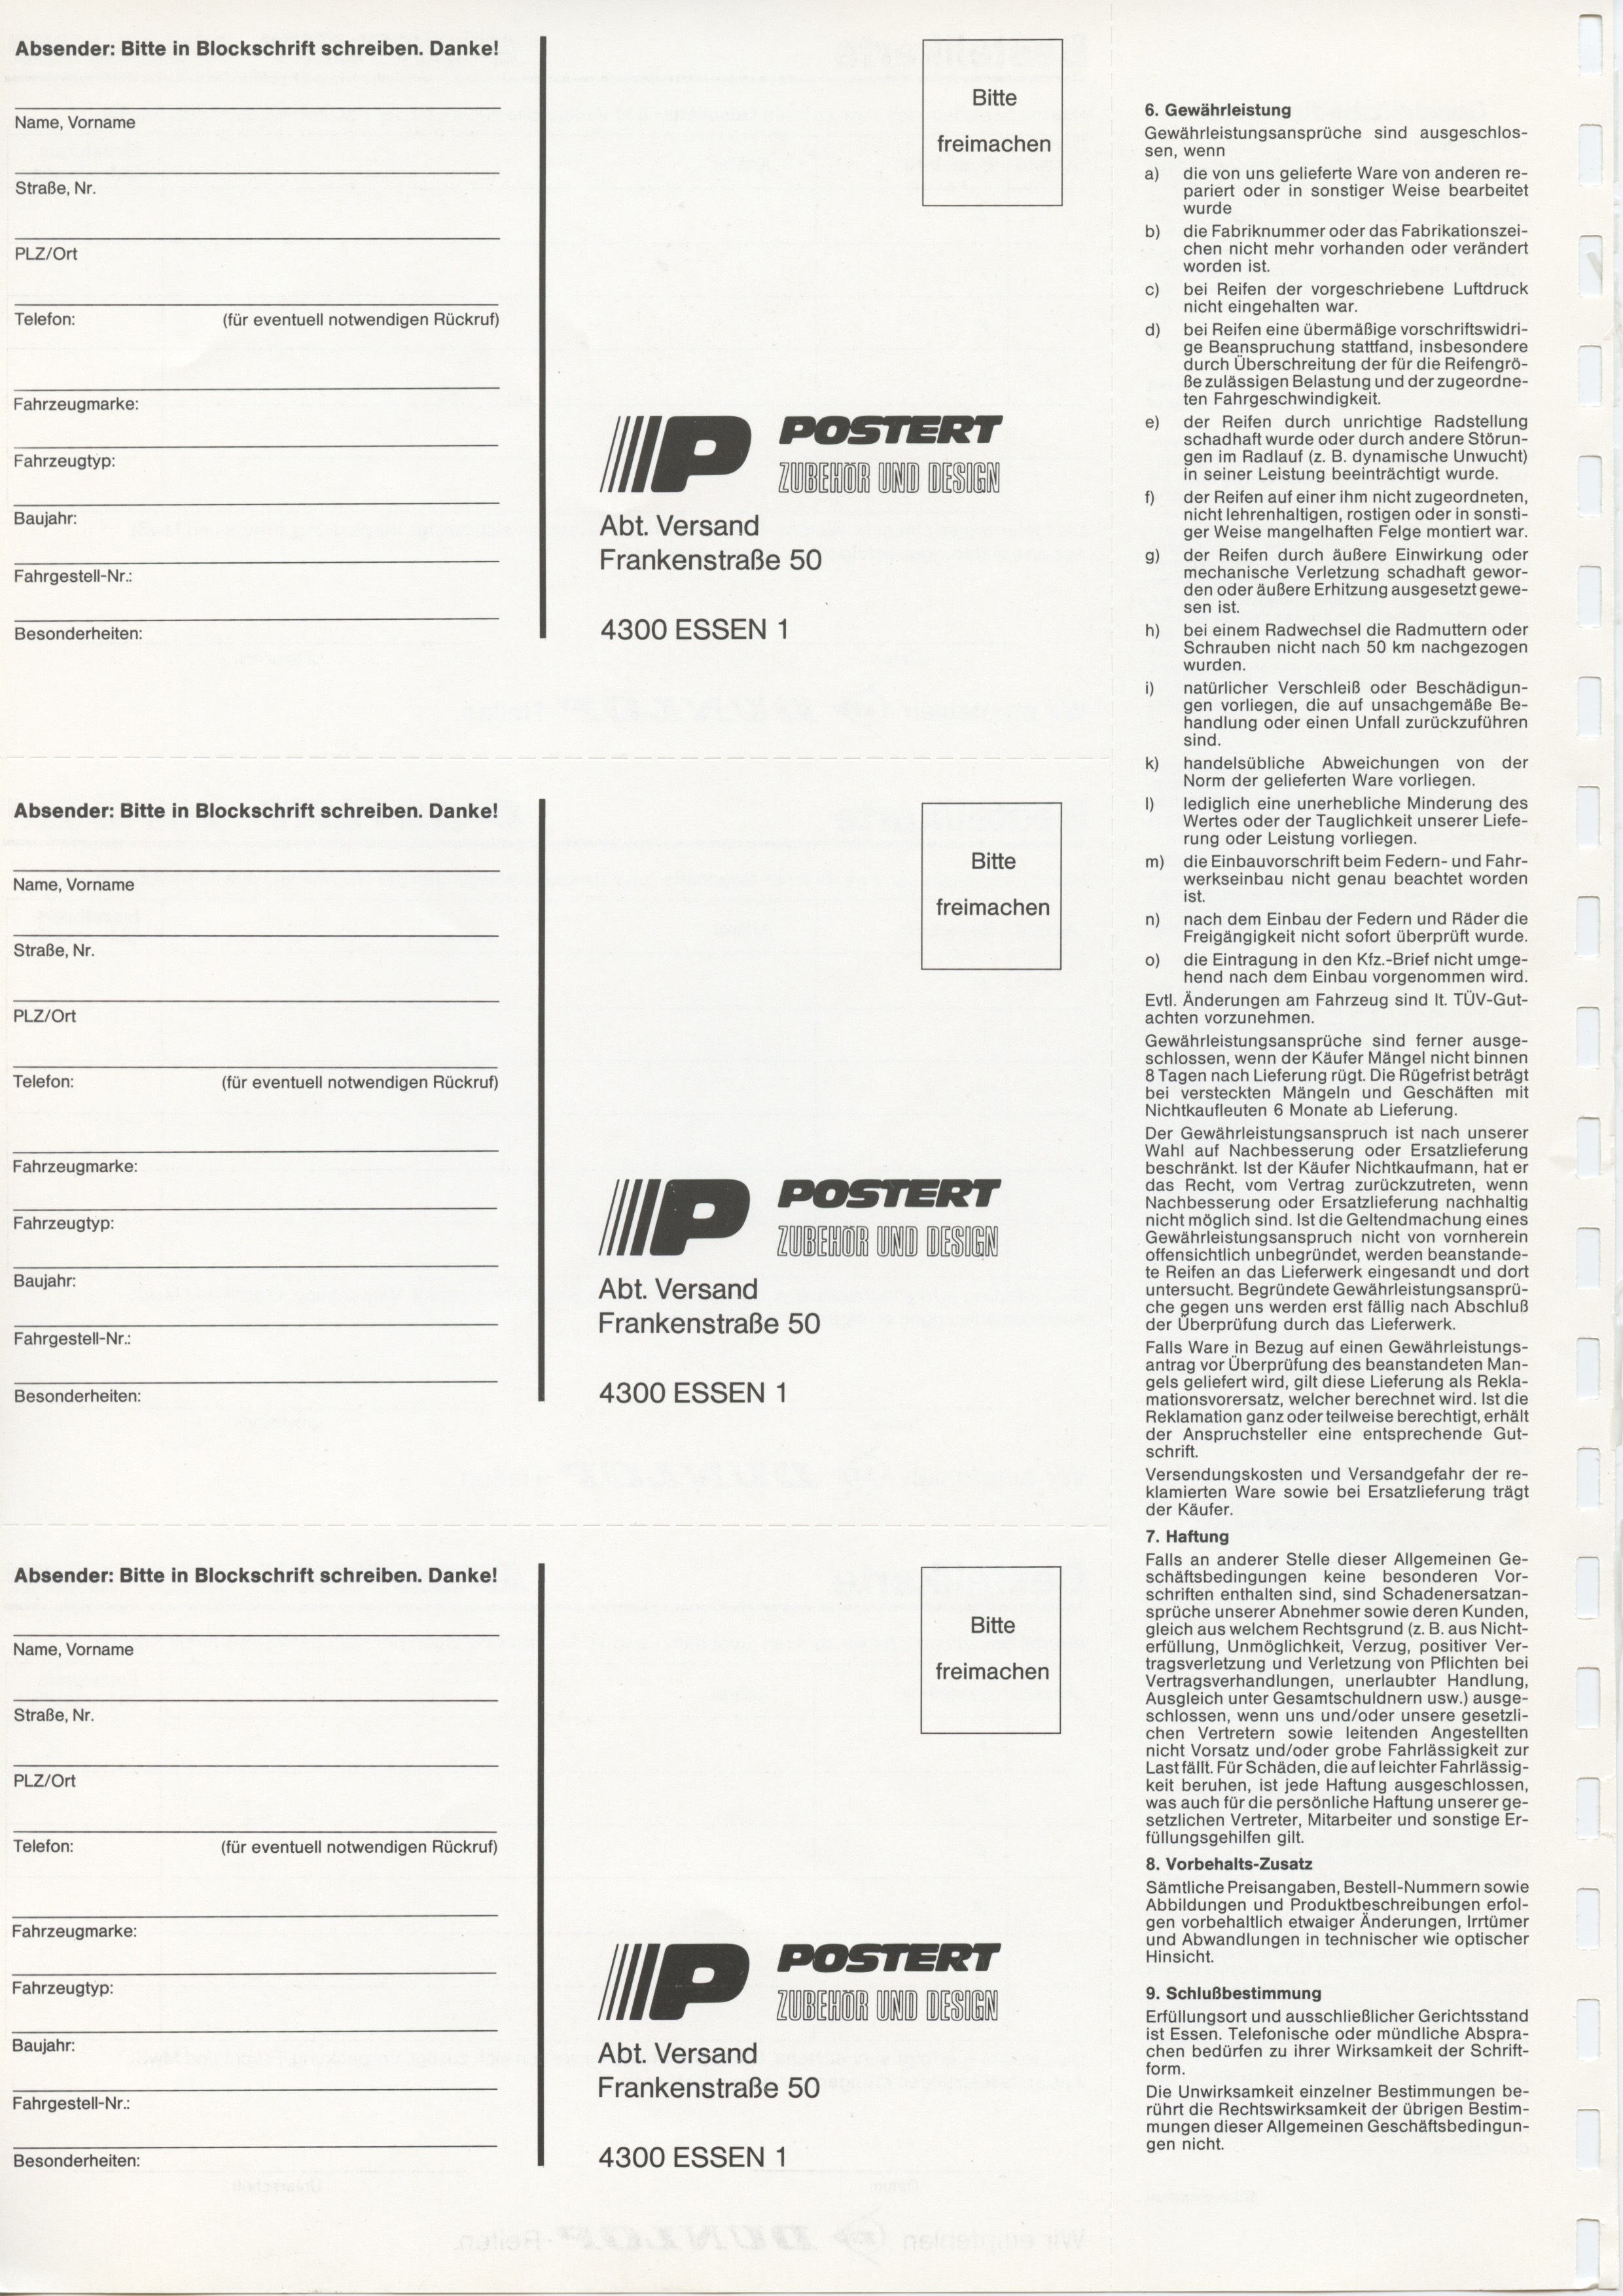 postert-catalogue-january-1988-page-04